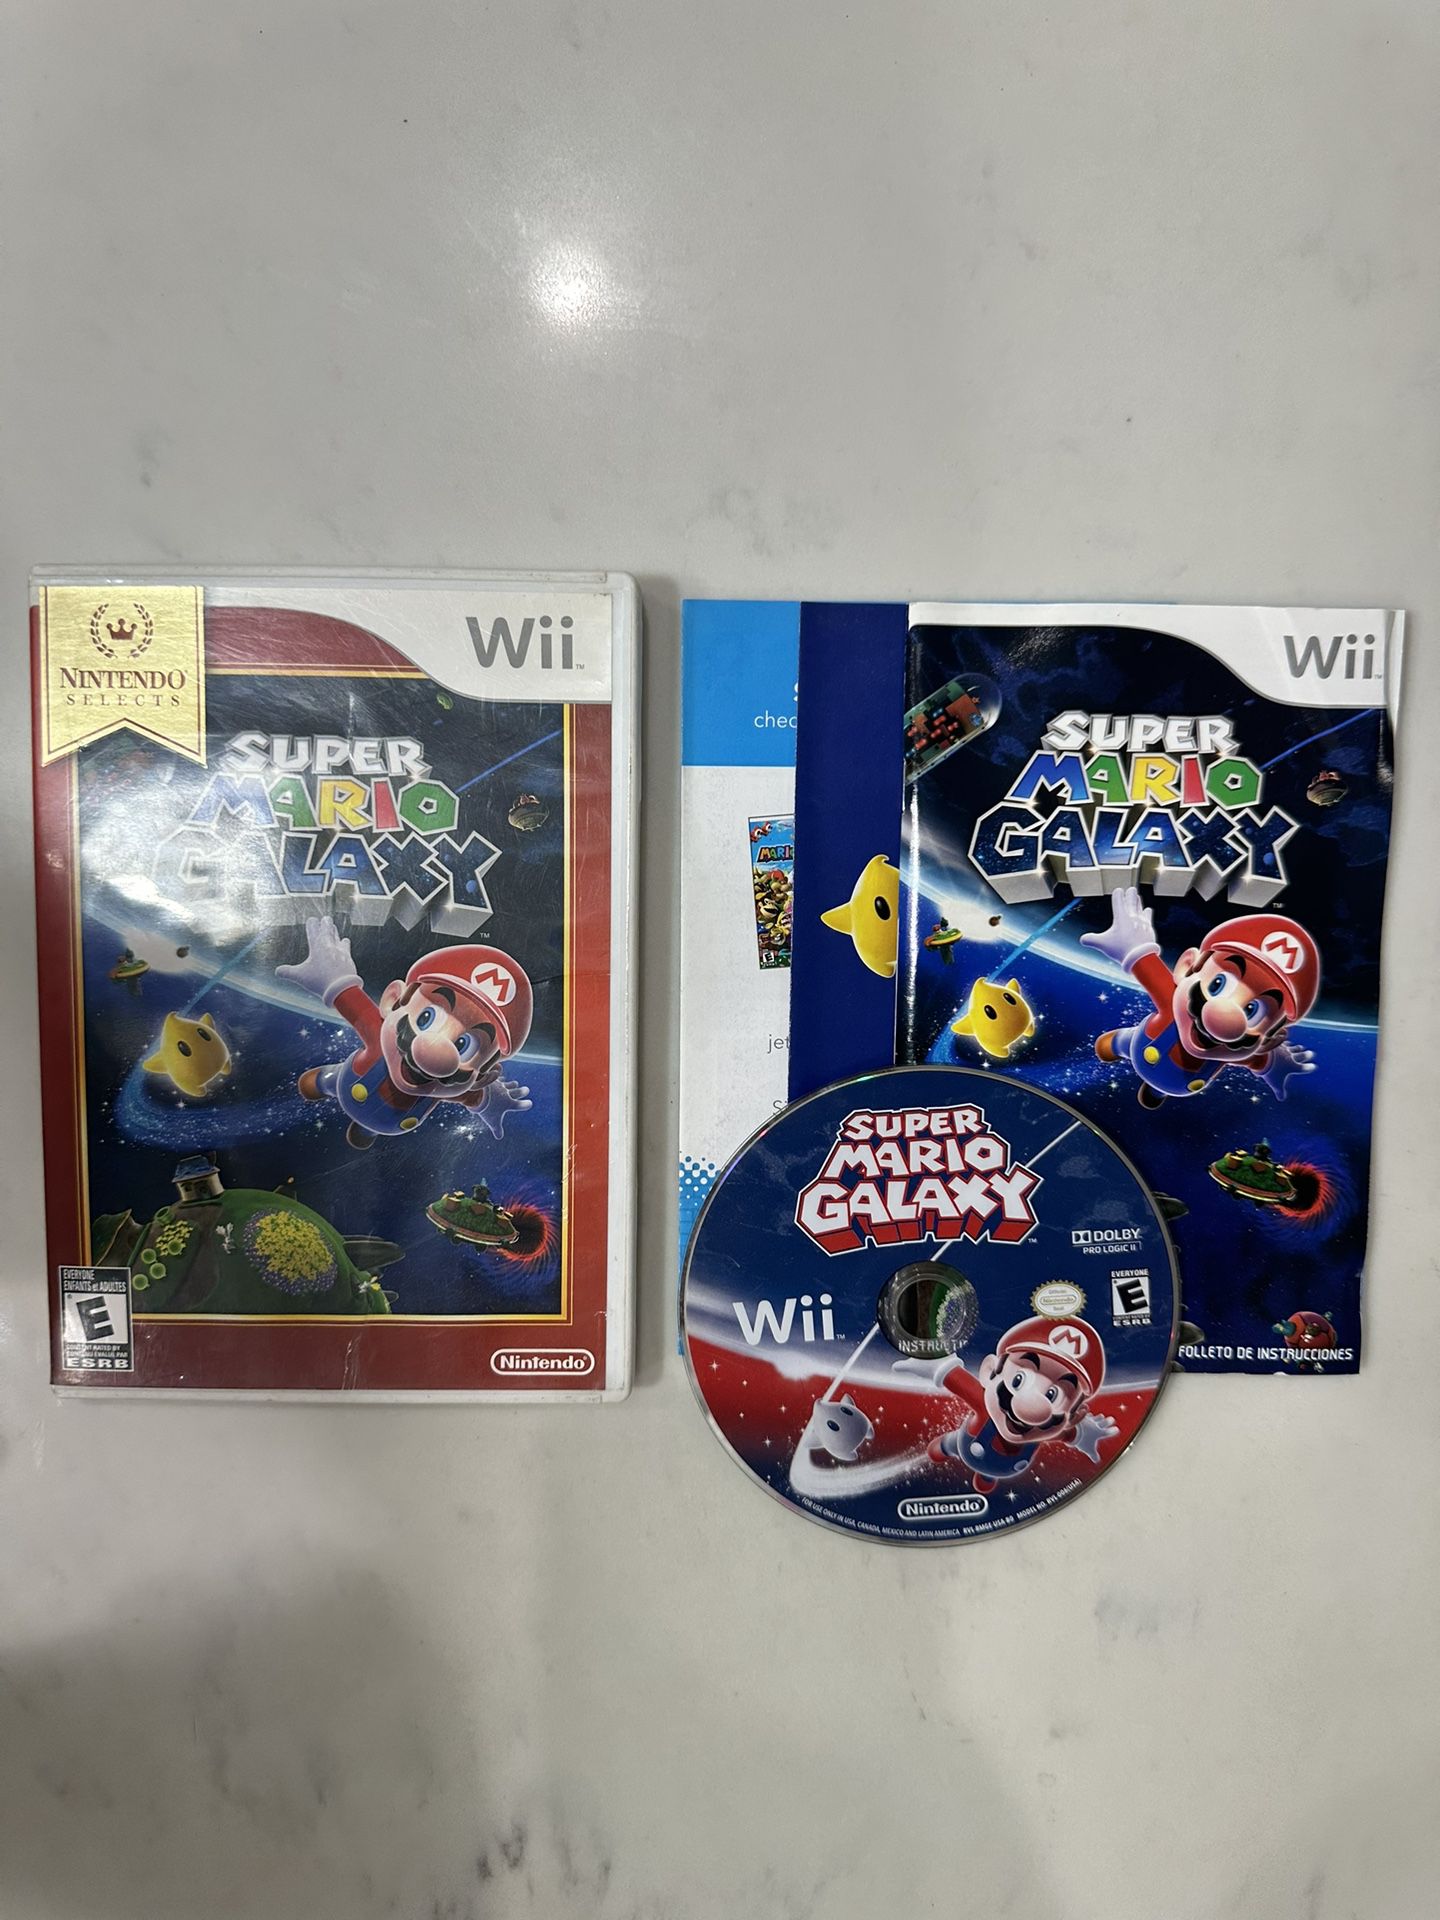 Super Mario Galaxy (Nintendo Selects)